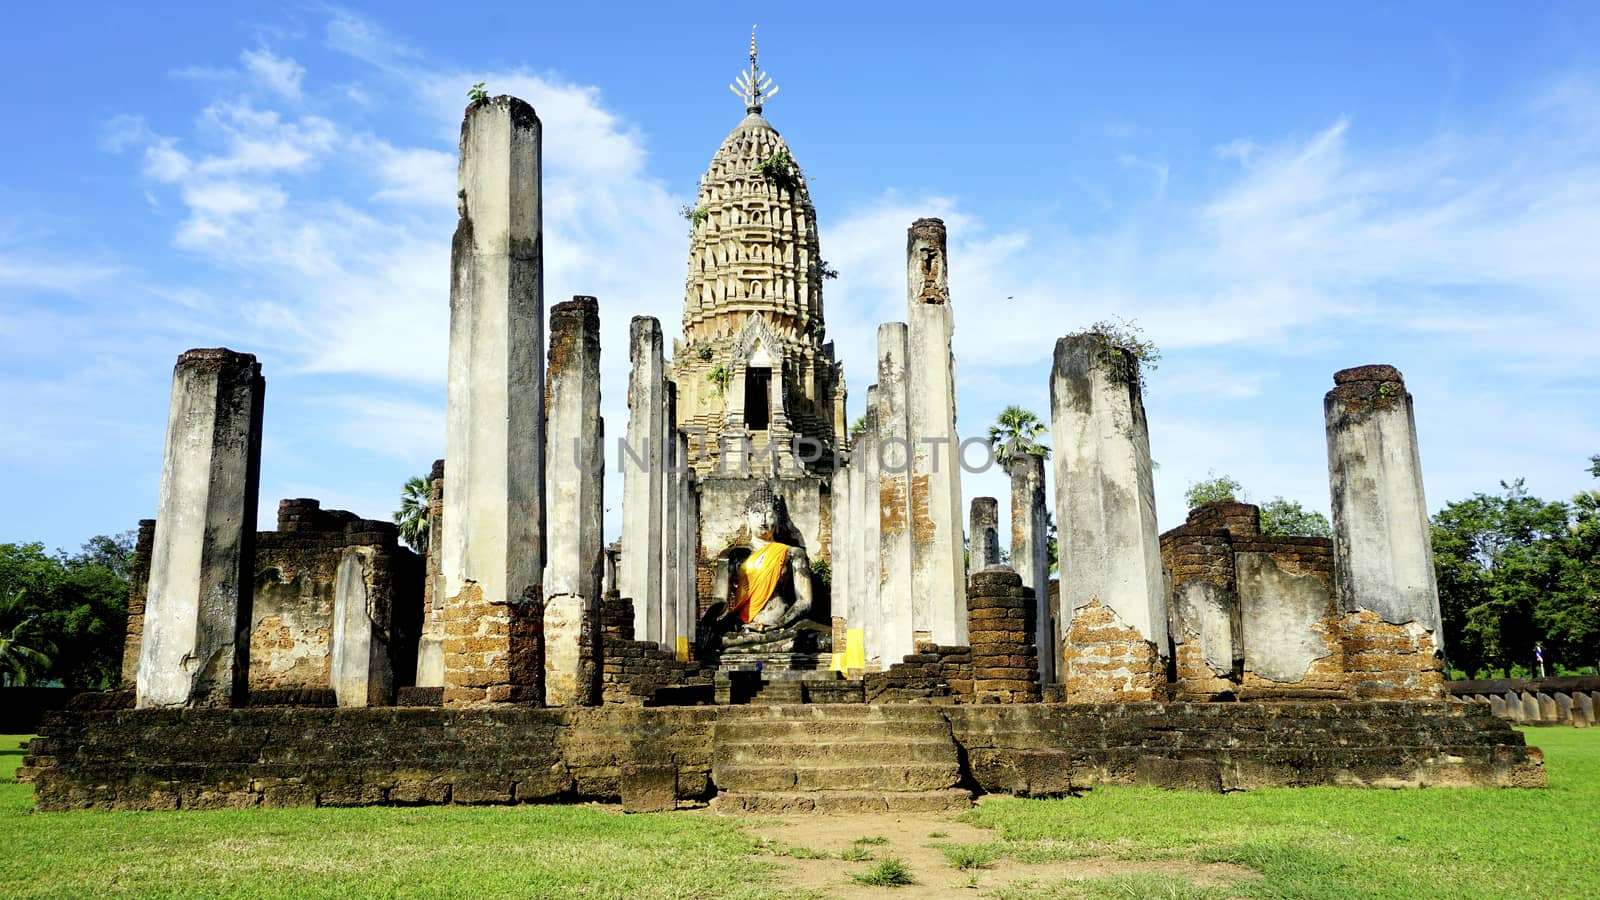 Wat Phra Si Rattana Mahathat Echliyong in Sukhothai temple world heritage

